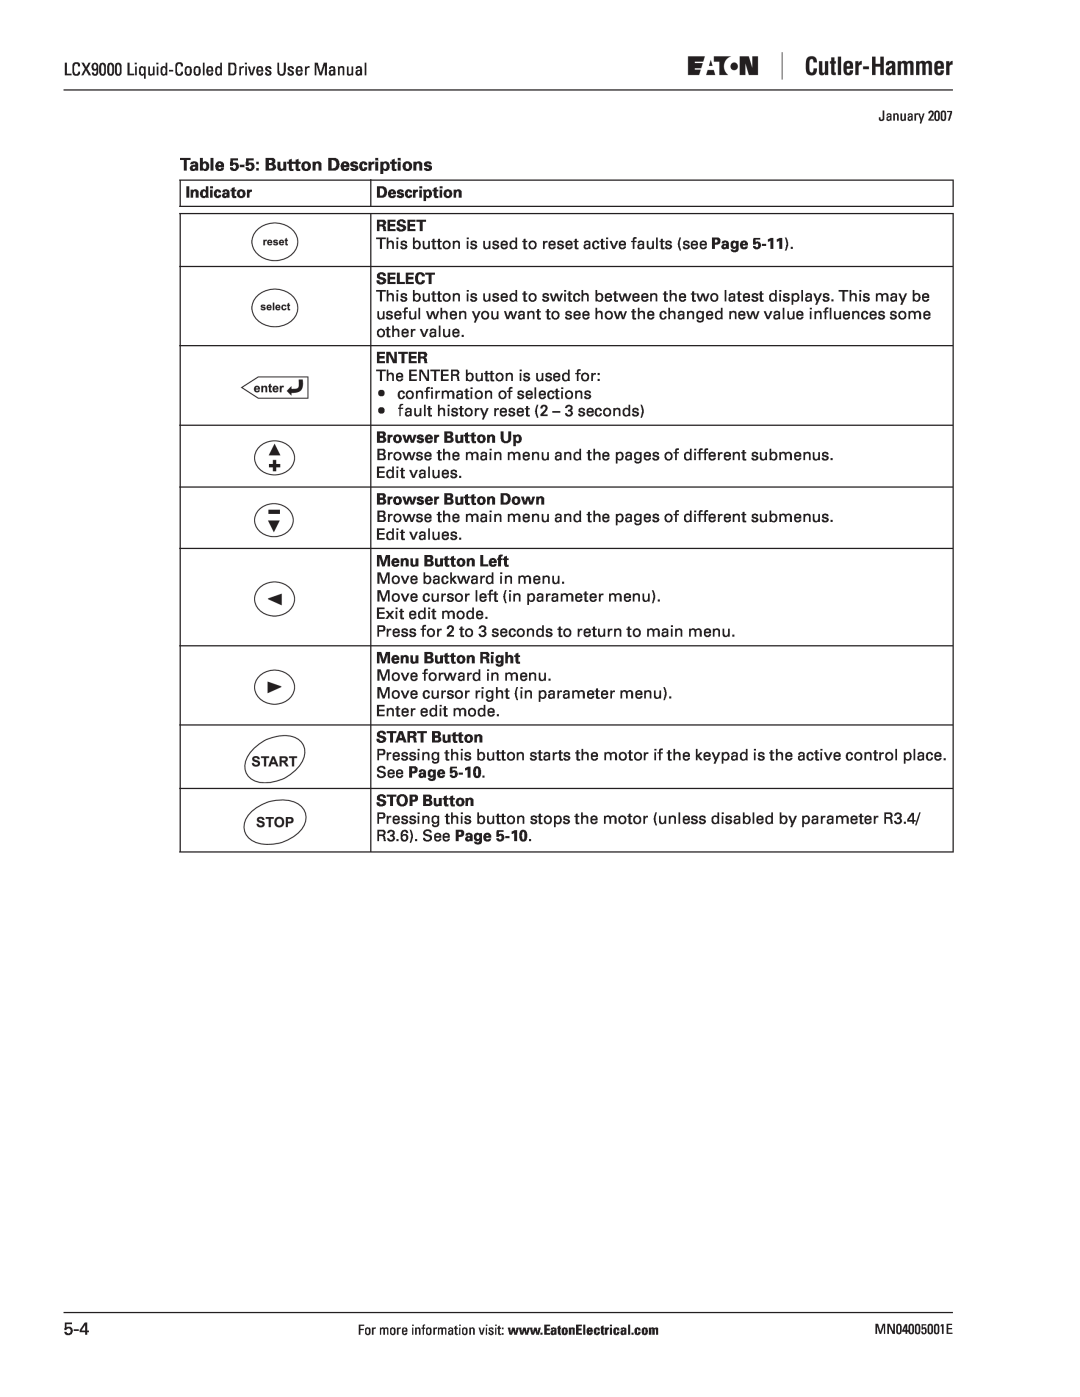 J. T. Eaton user manual 5 Button Descriptions, LCX9000 Liquid-Cooled Drives User Manual 